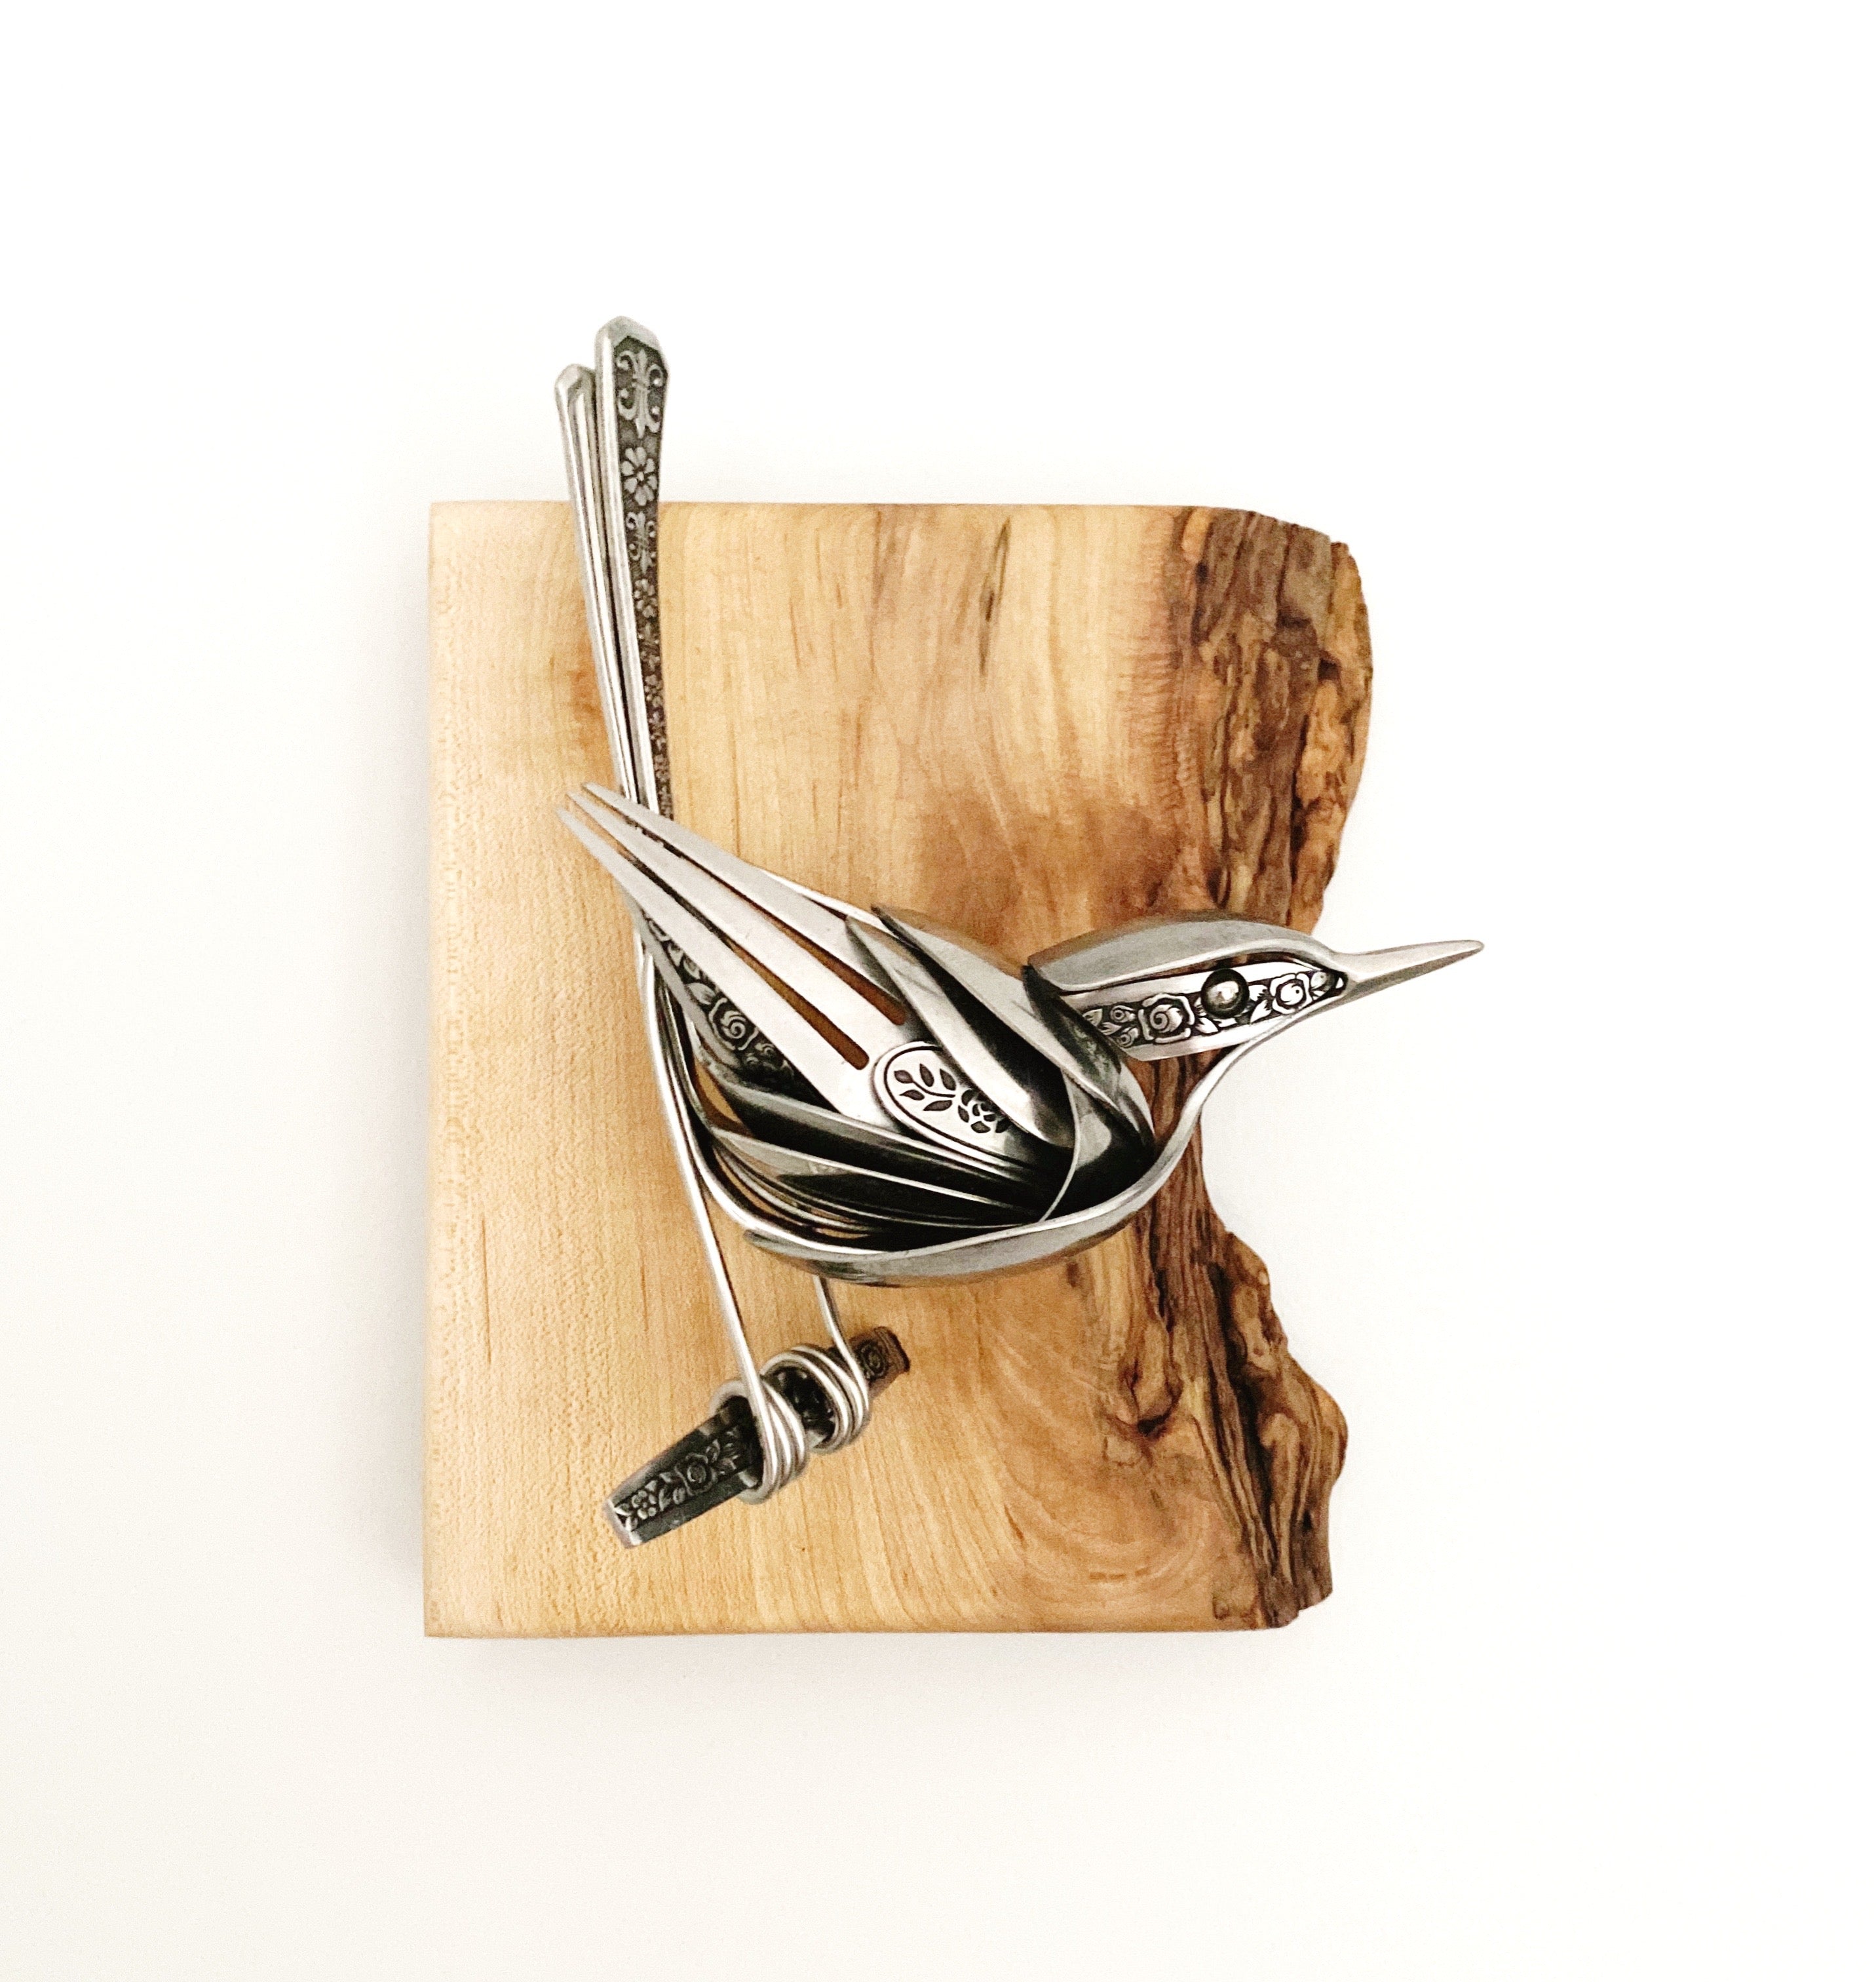 "Mavis" - Metal Bird Sculpture